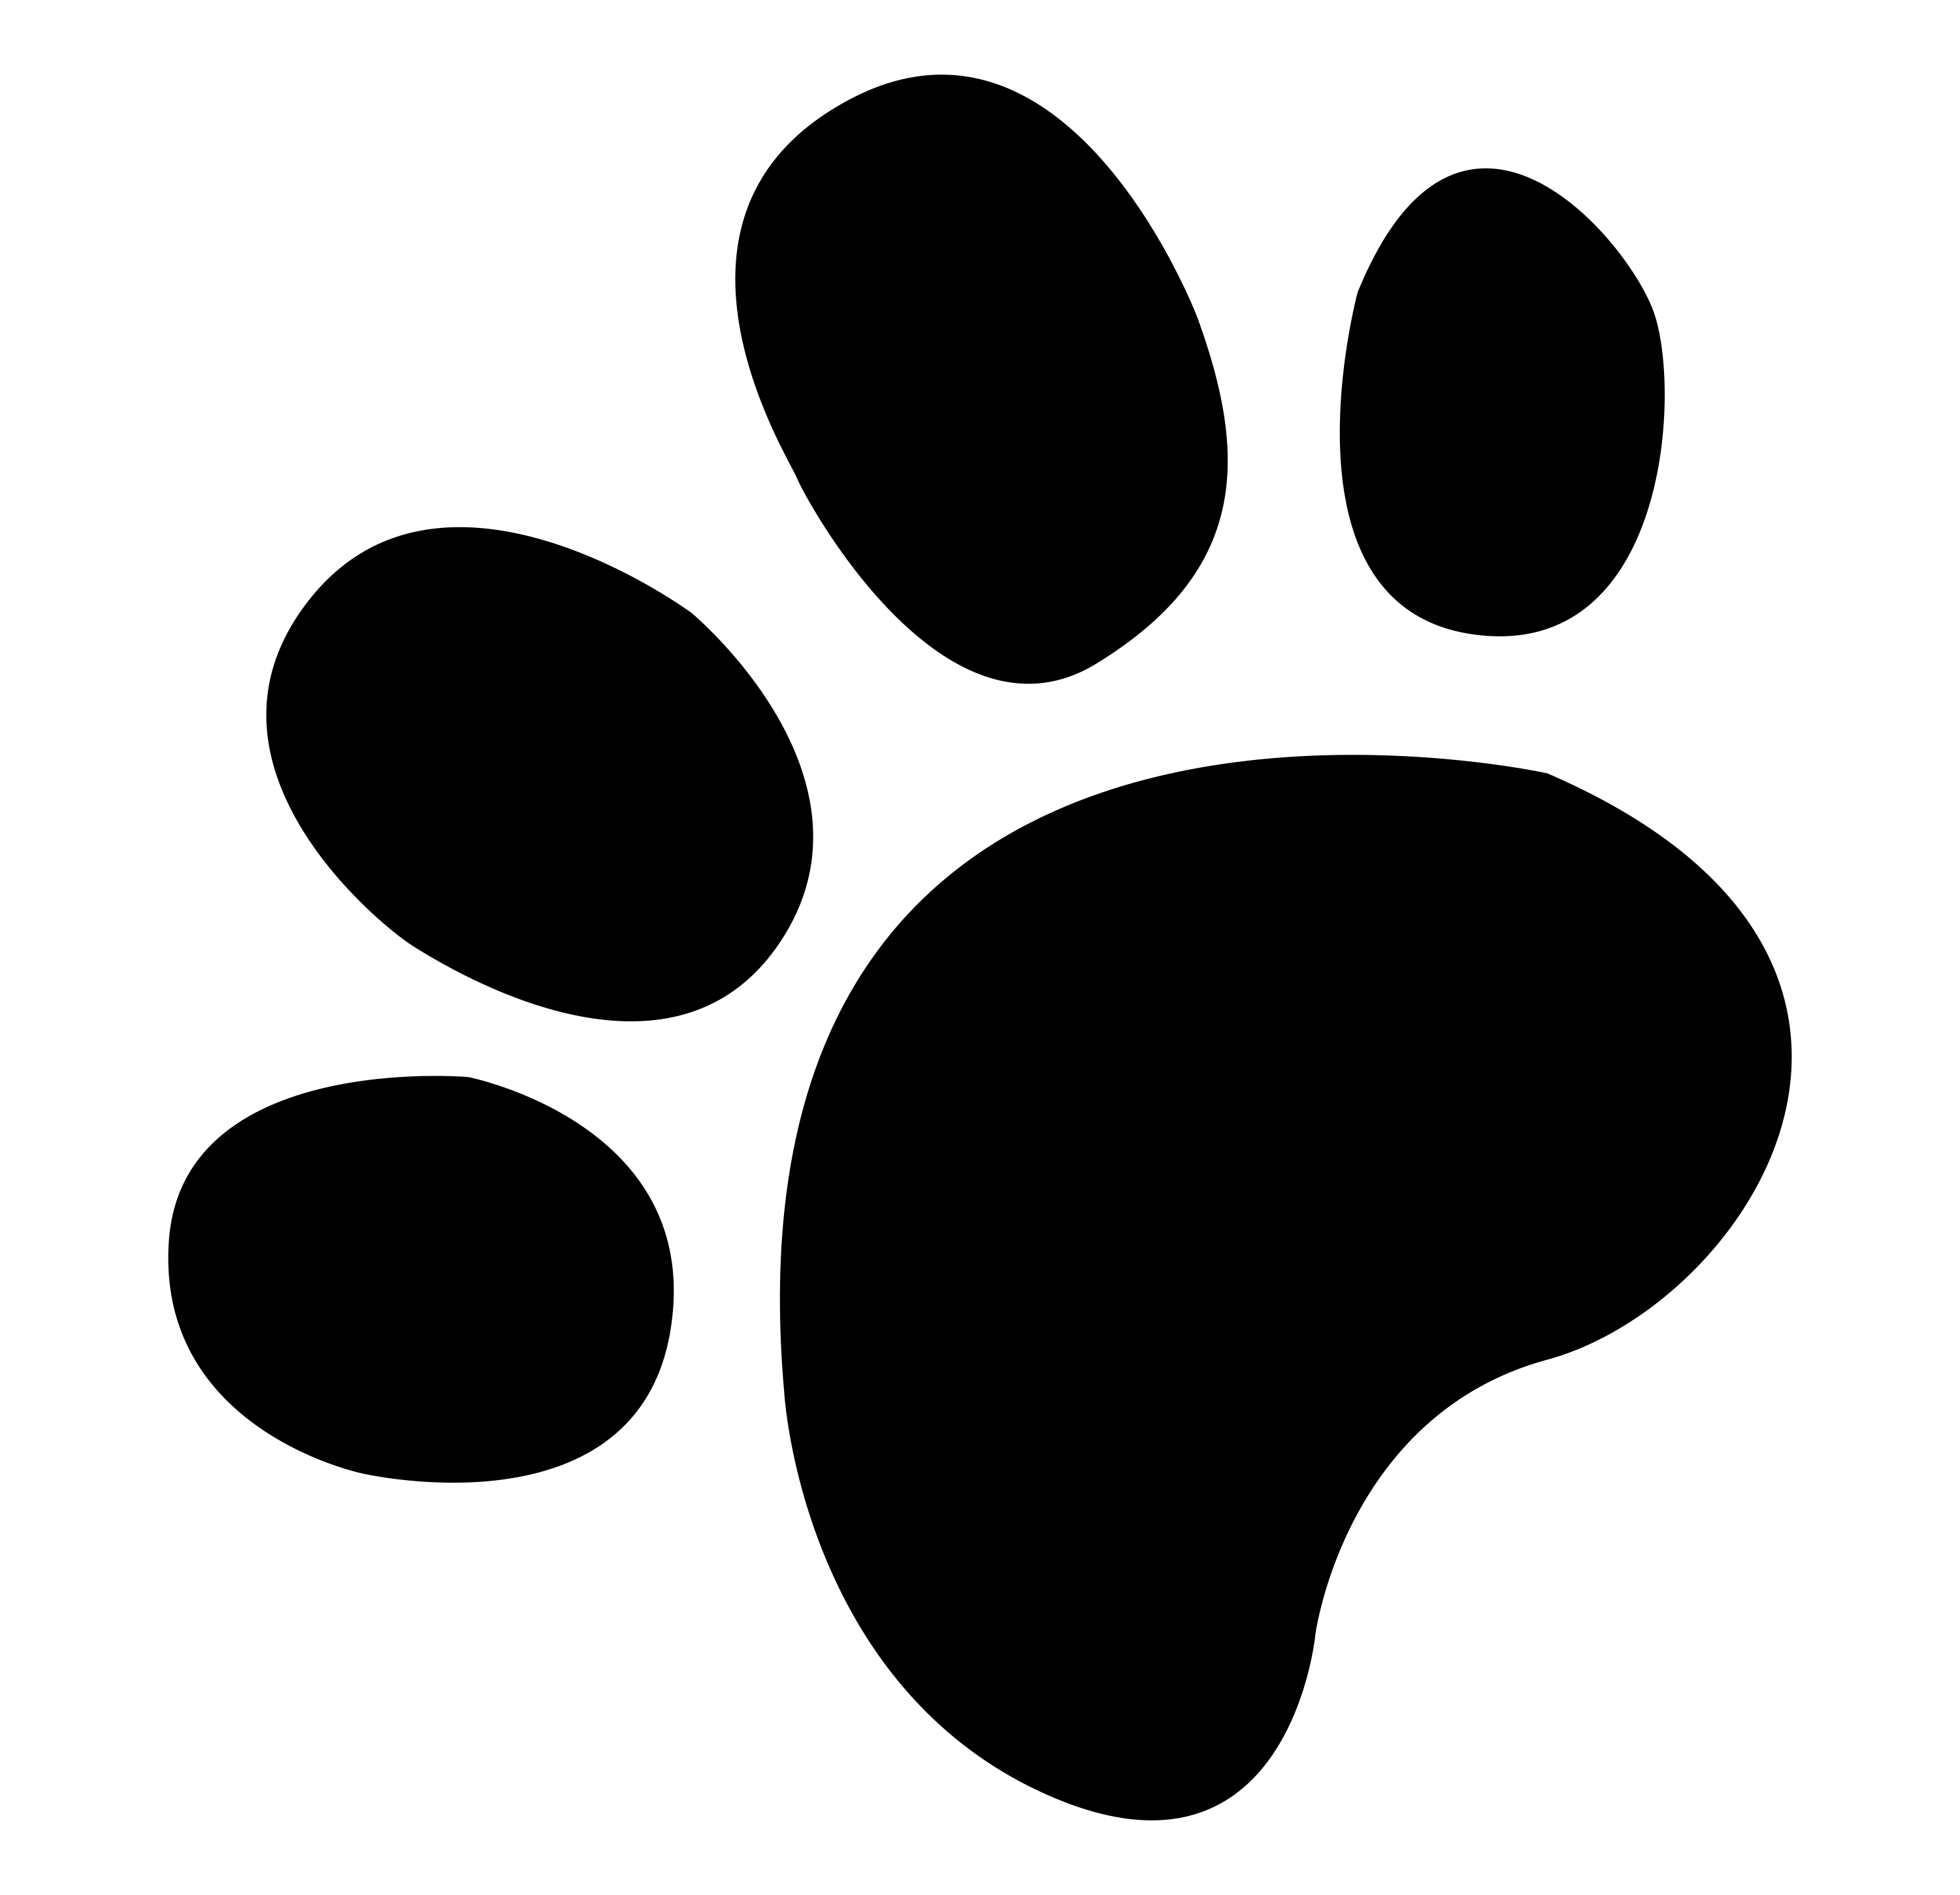 free clip art of dog paw prints - photo #28